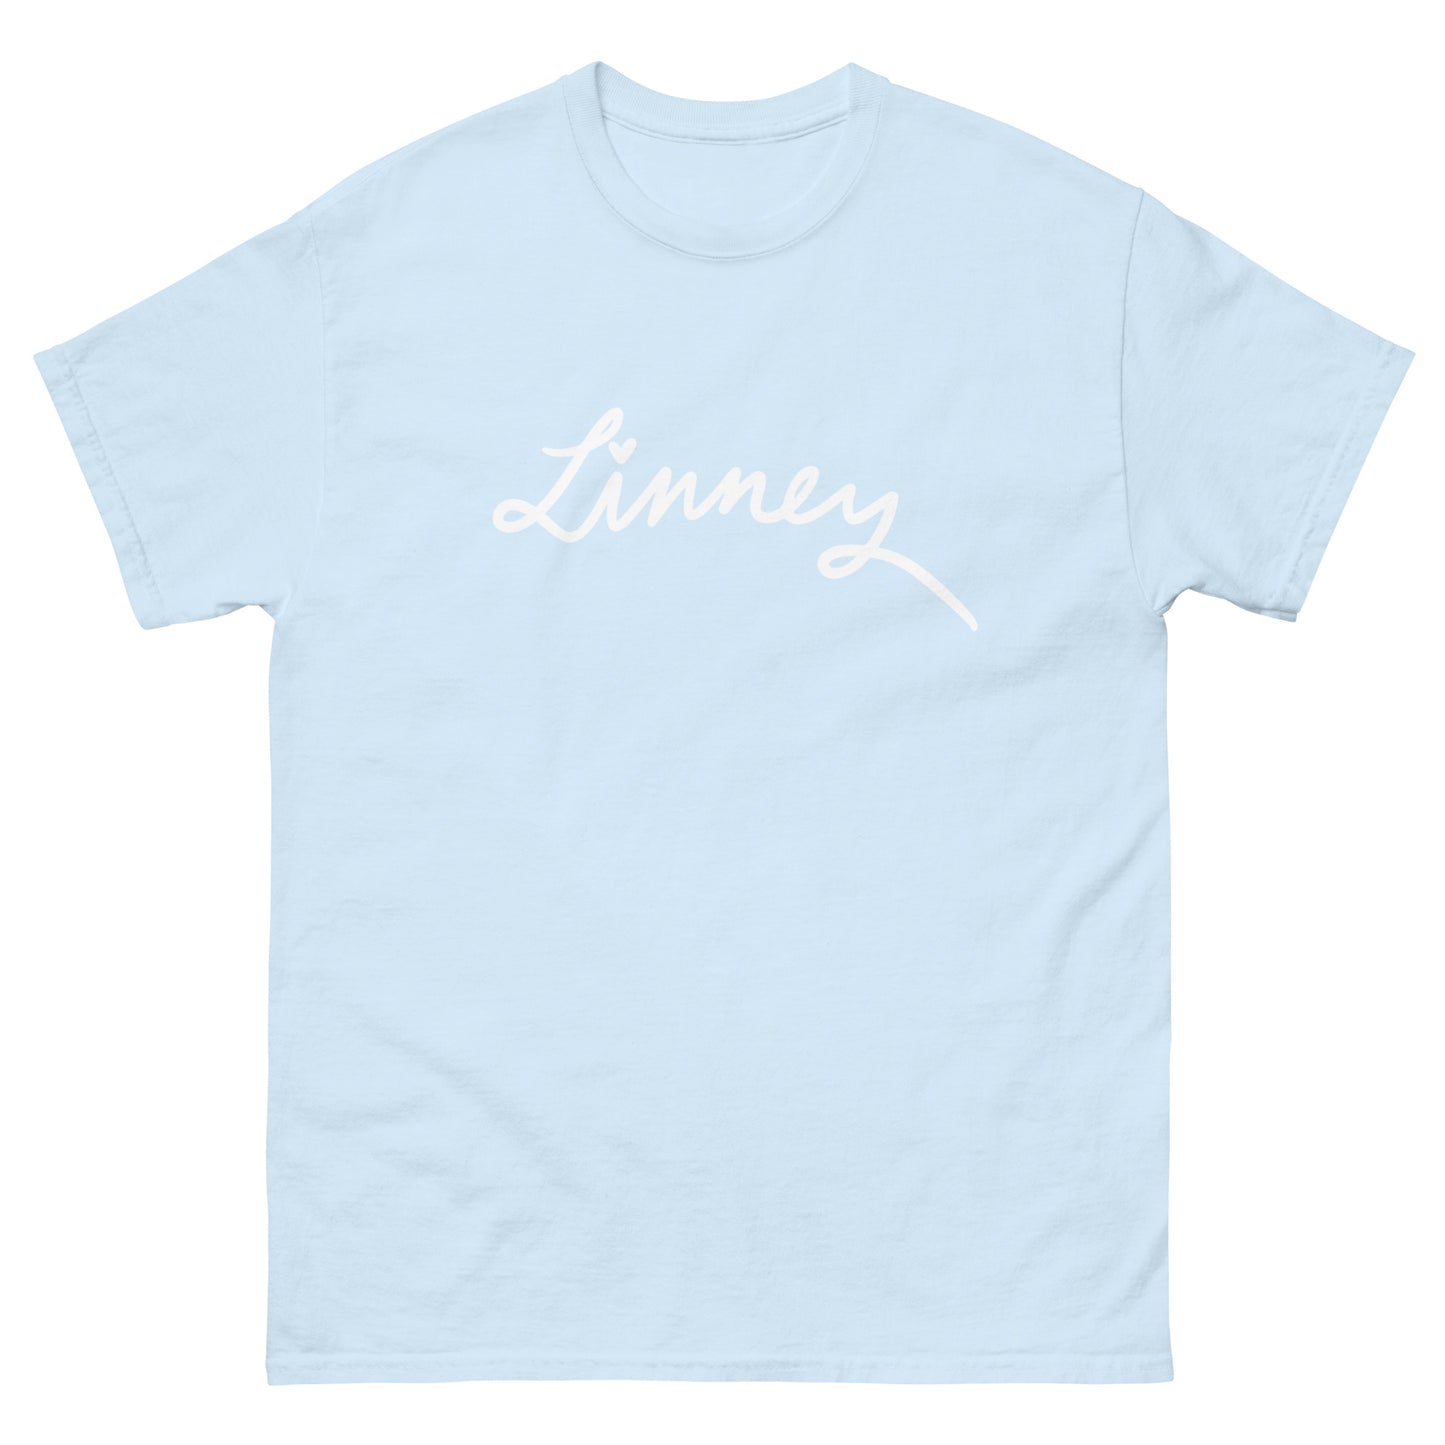 Linney (White Logo) Classic Tee